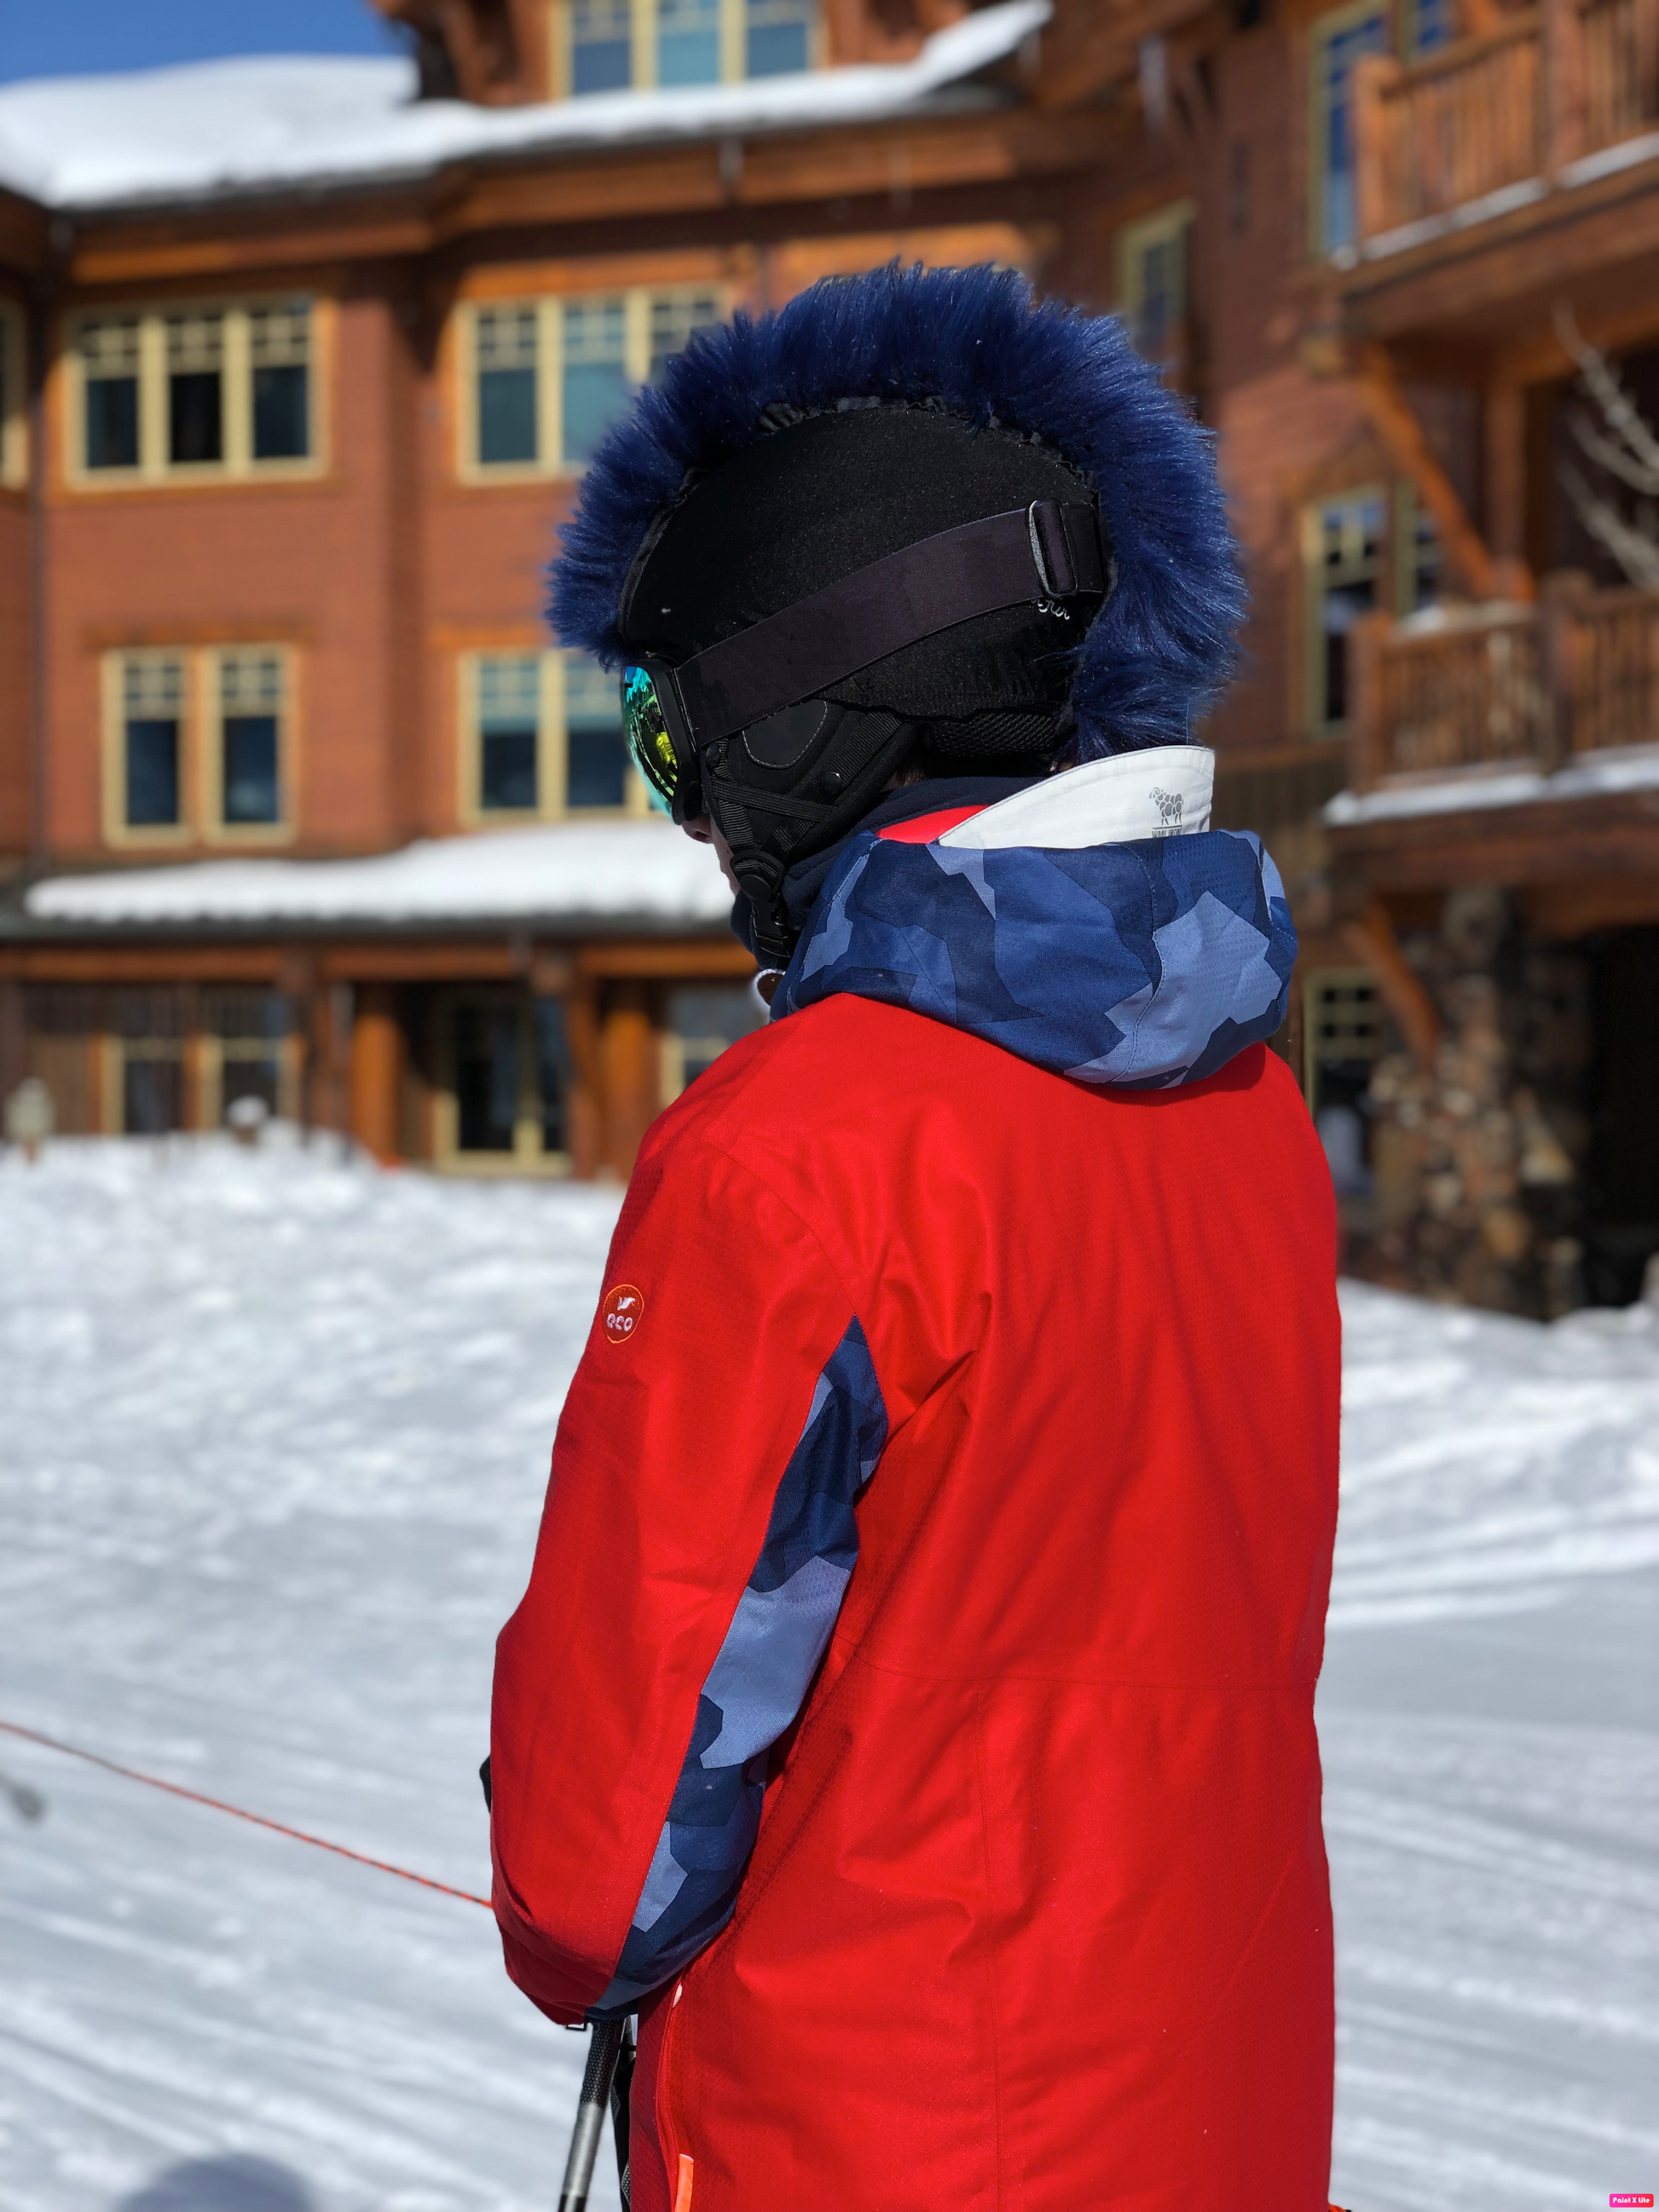 Fur ski helmet cover - Mohawk - Burrfur